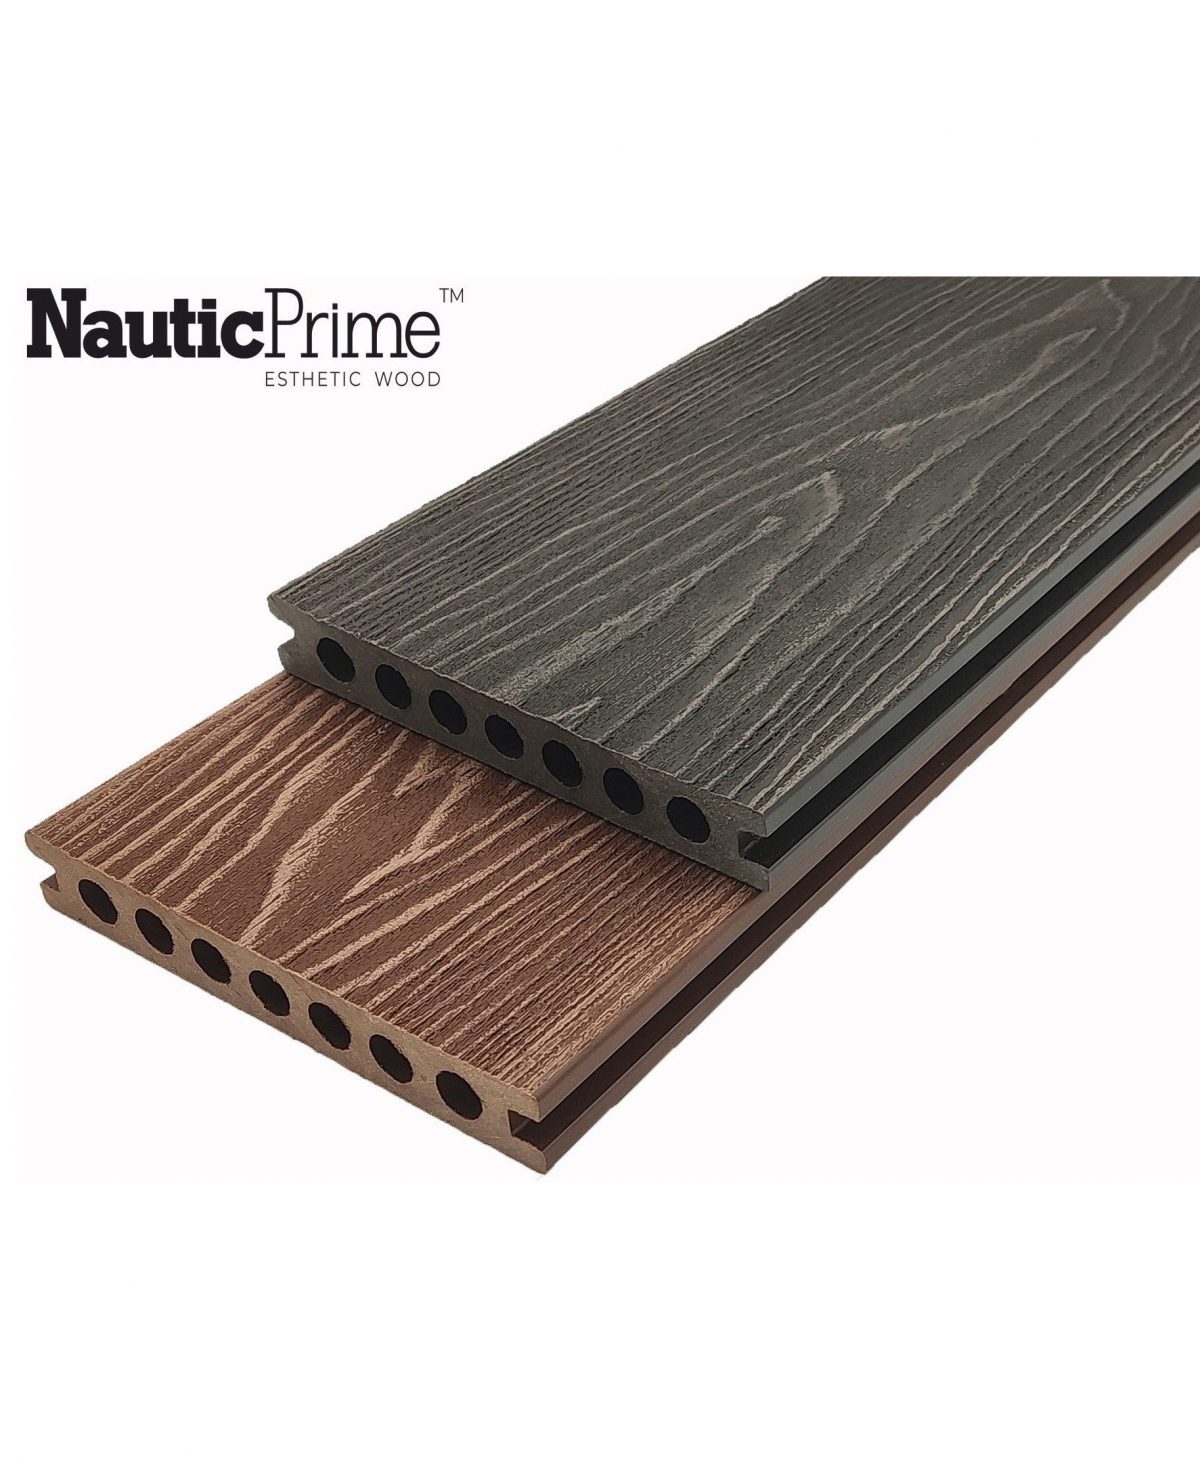 Террасная доска Nautic Prime Esthetic Wood / Retro Wood